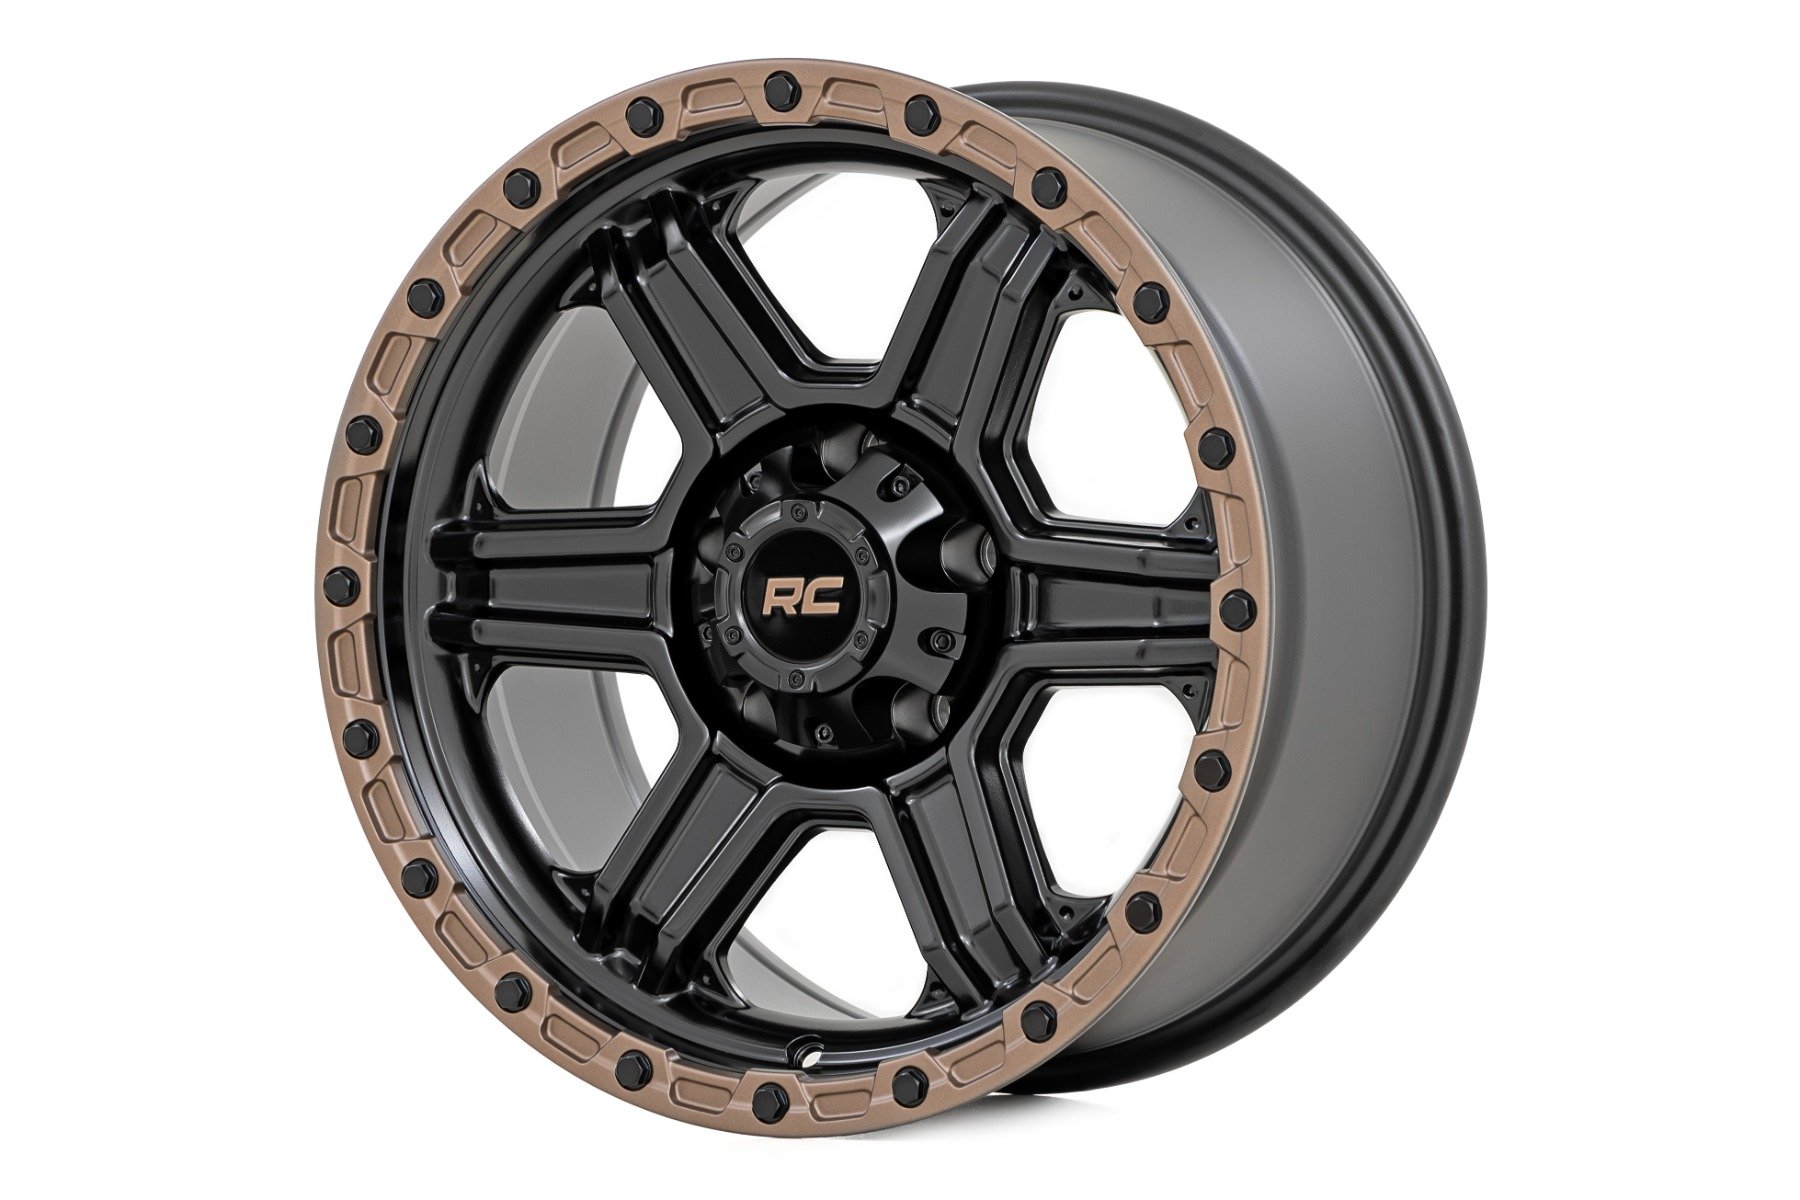 Custom Wheels - 79 Series - One-Piece - Semi Gloss Black w/ Bronze Ring | 18x9 | 5x5.0 | 0mm - Rough Country 